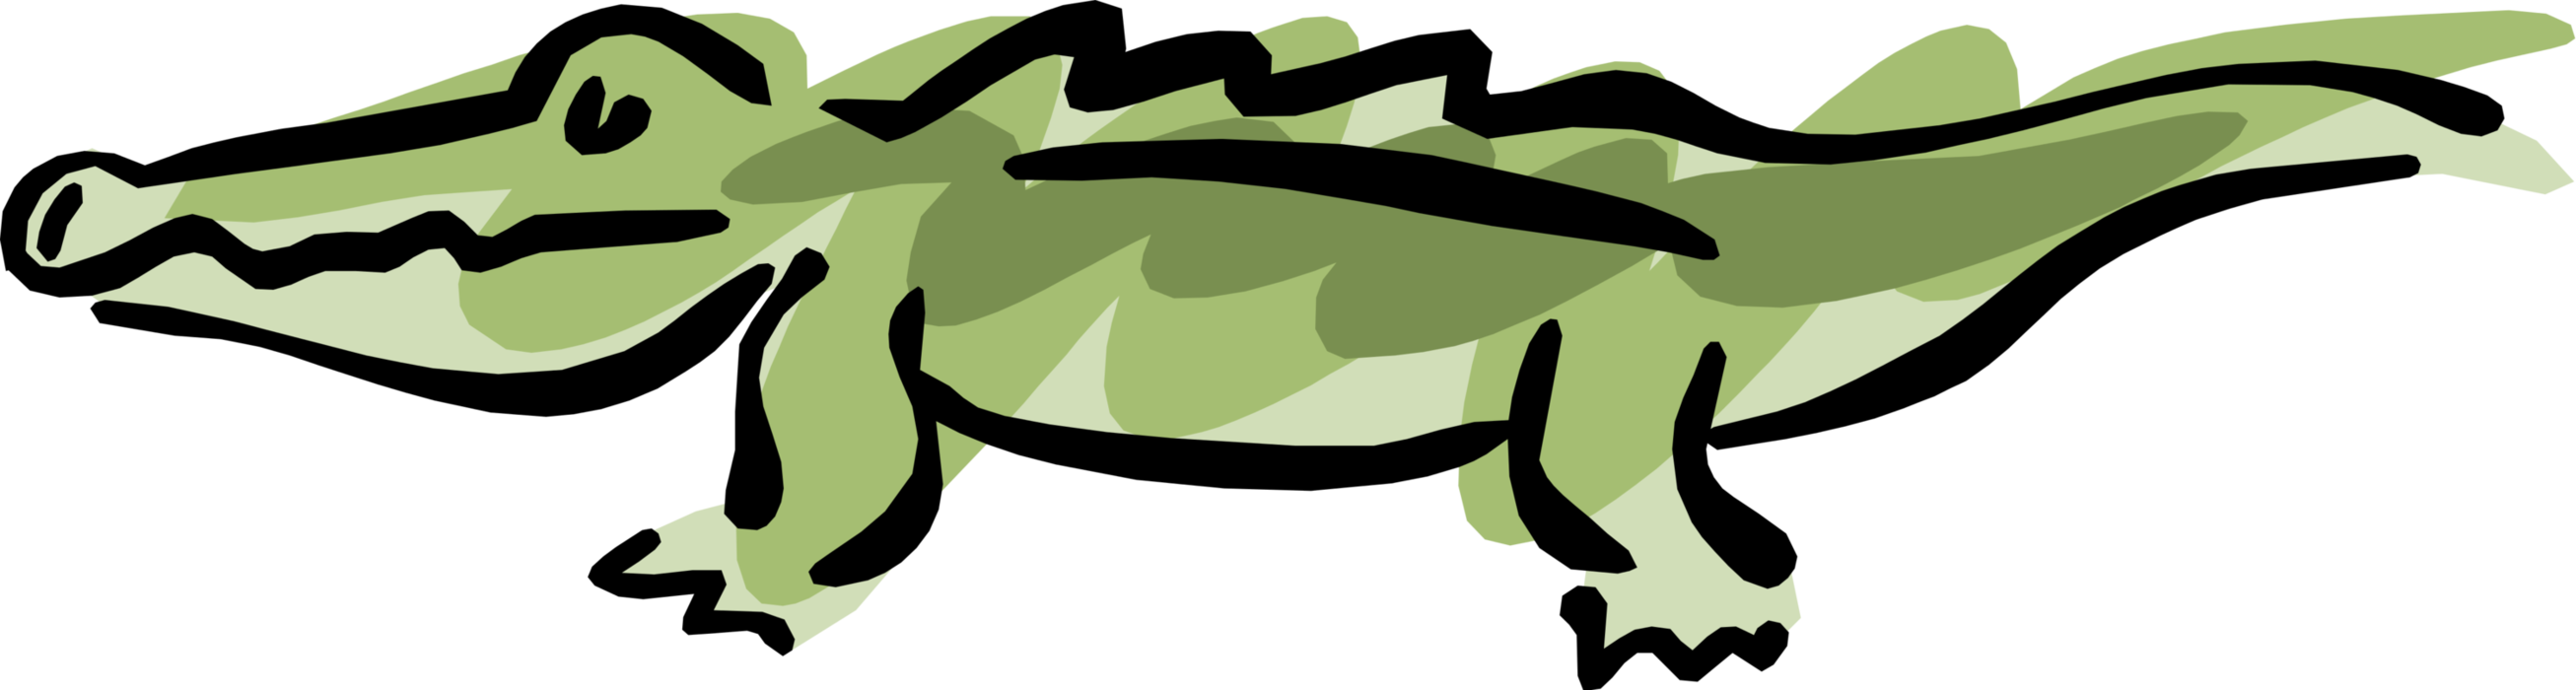 Vector Illustration of Alligator or Crocodile Walking